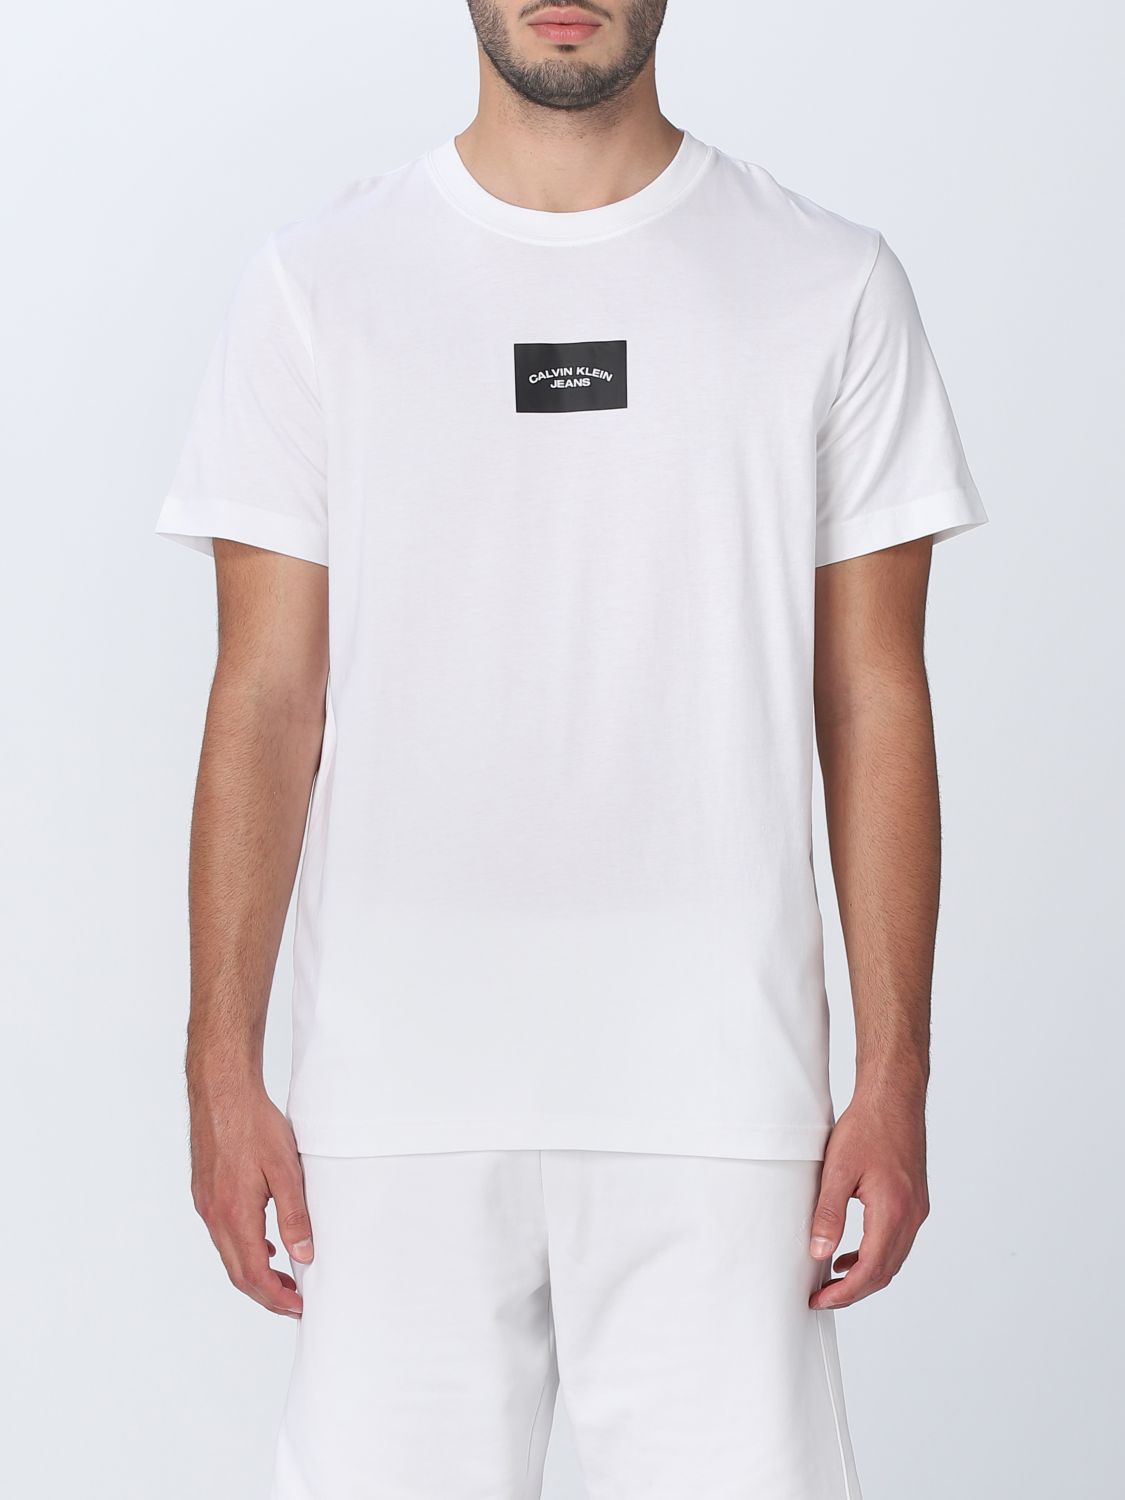 Calvin Klein Jeans T-Shirt CALVIN KLEIN JEANS Men colour White